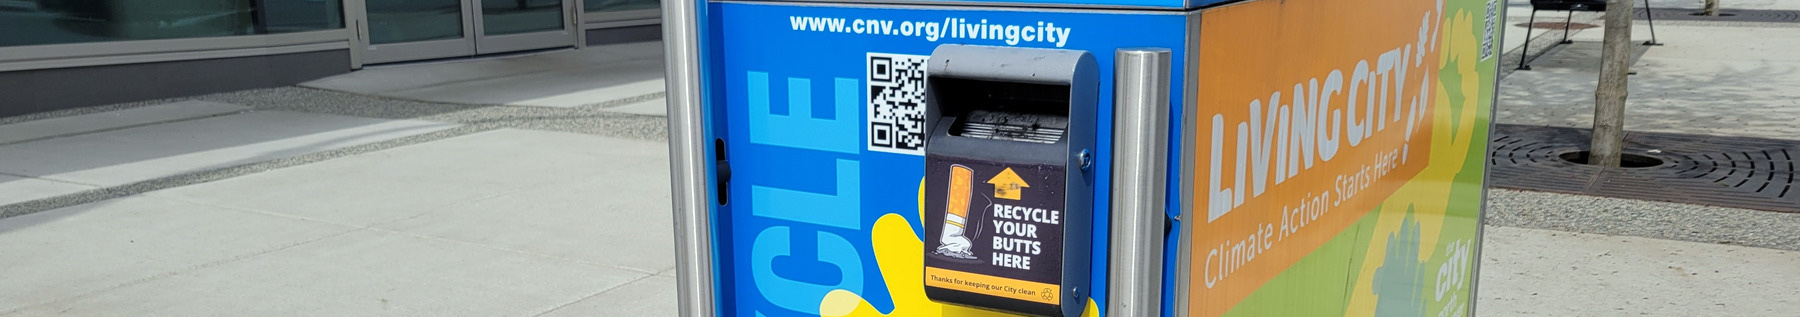 cigarette butt recycling